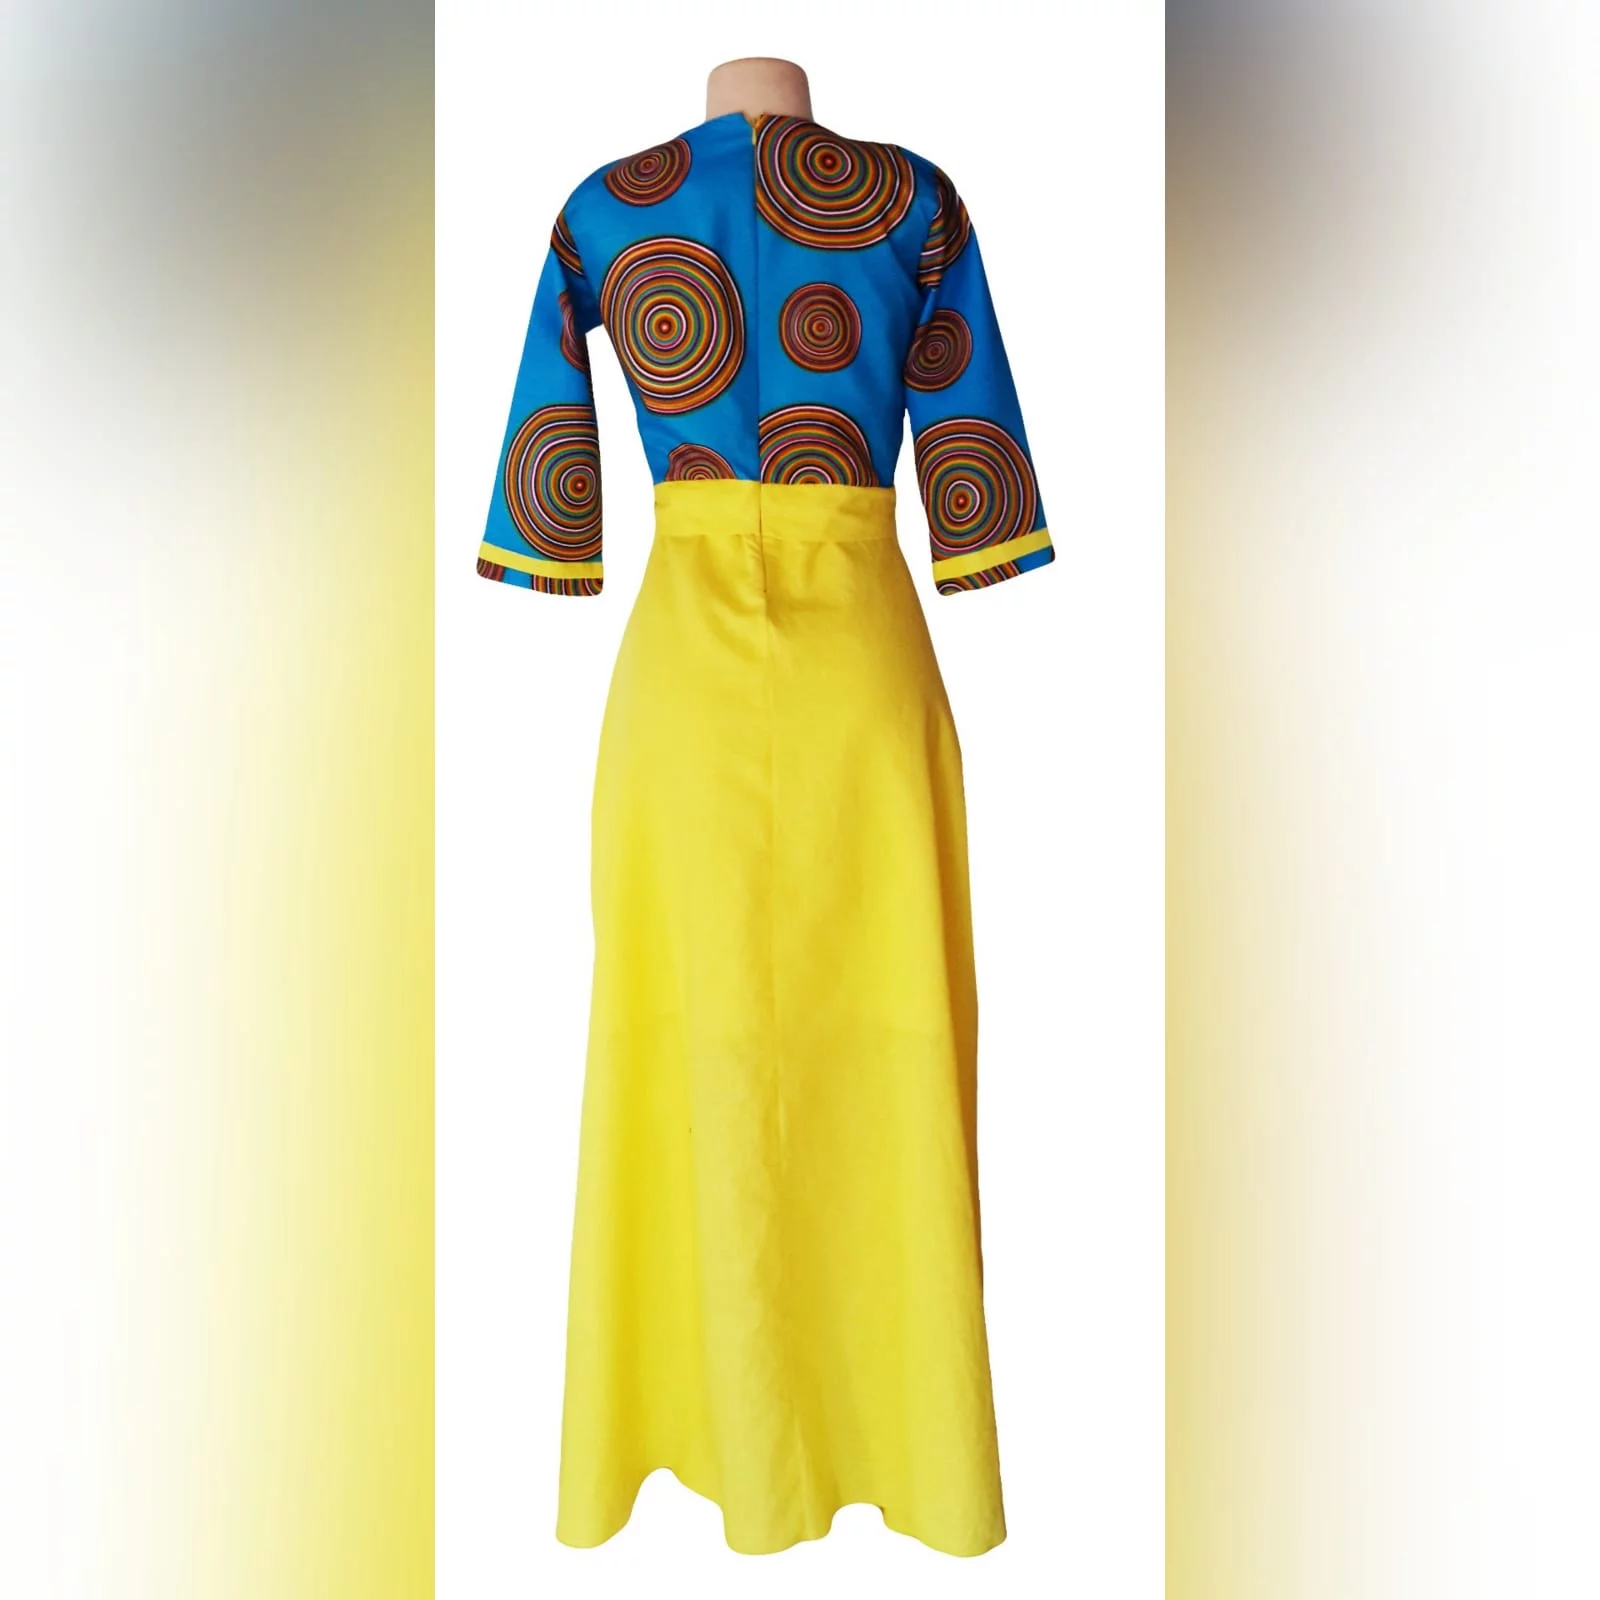 Blue & yellow modern traditional dress 7 modern traditional blue and yellow empire fit dress. Flowy bottom, neckline with a slit.